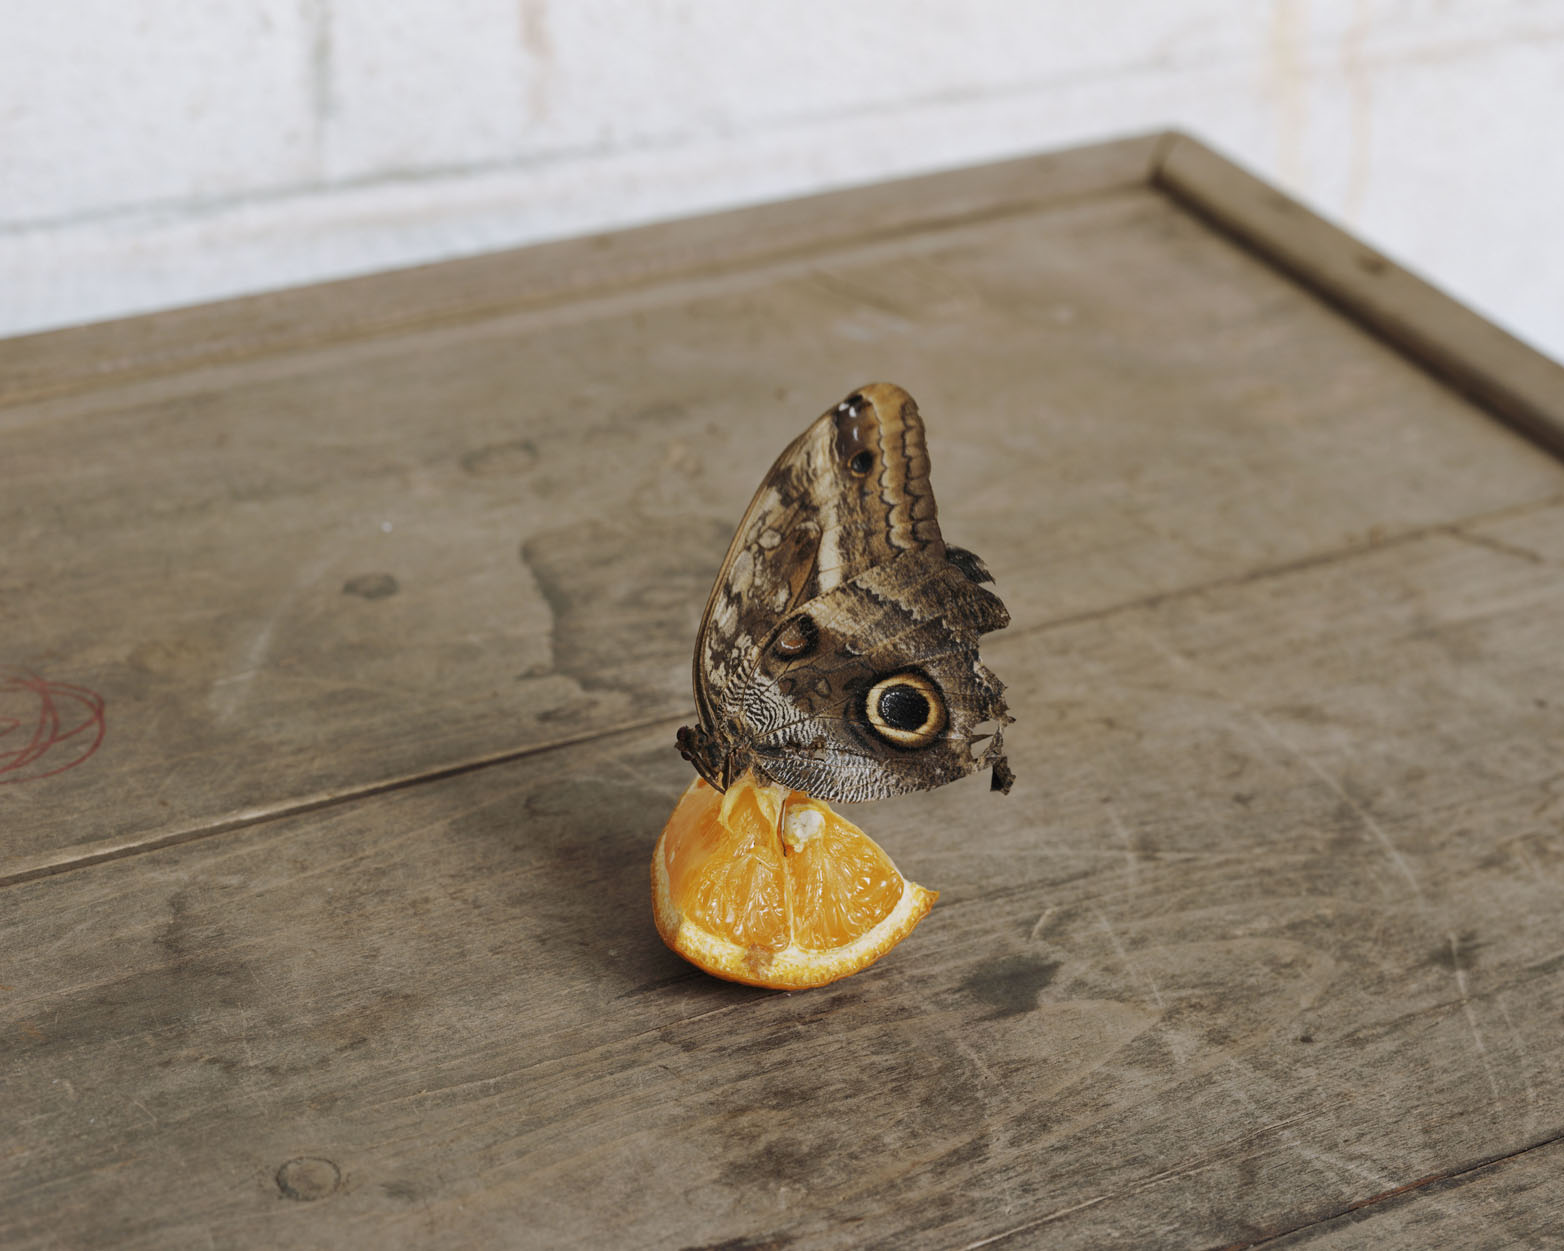 A moth on an orange slice.